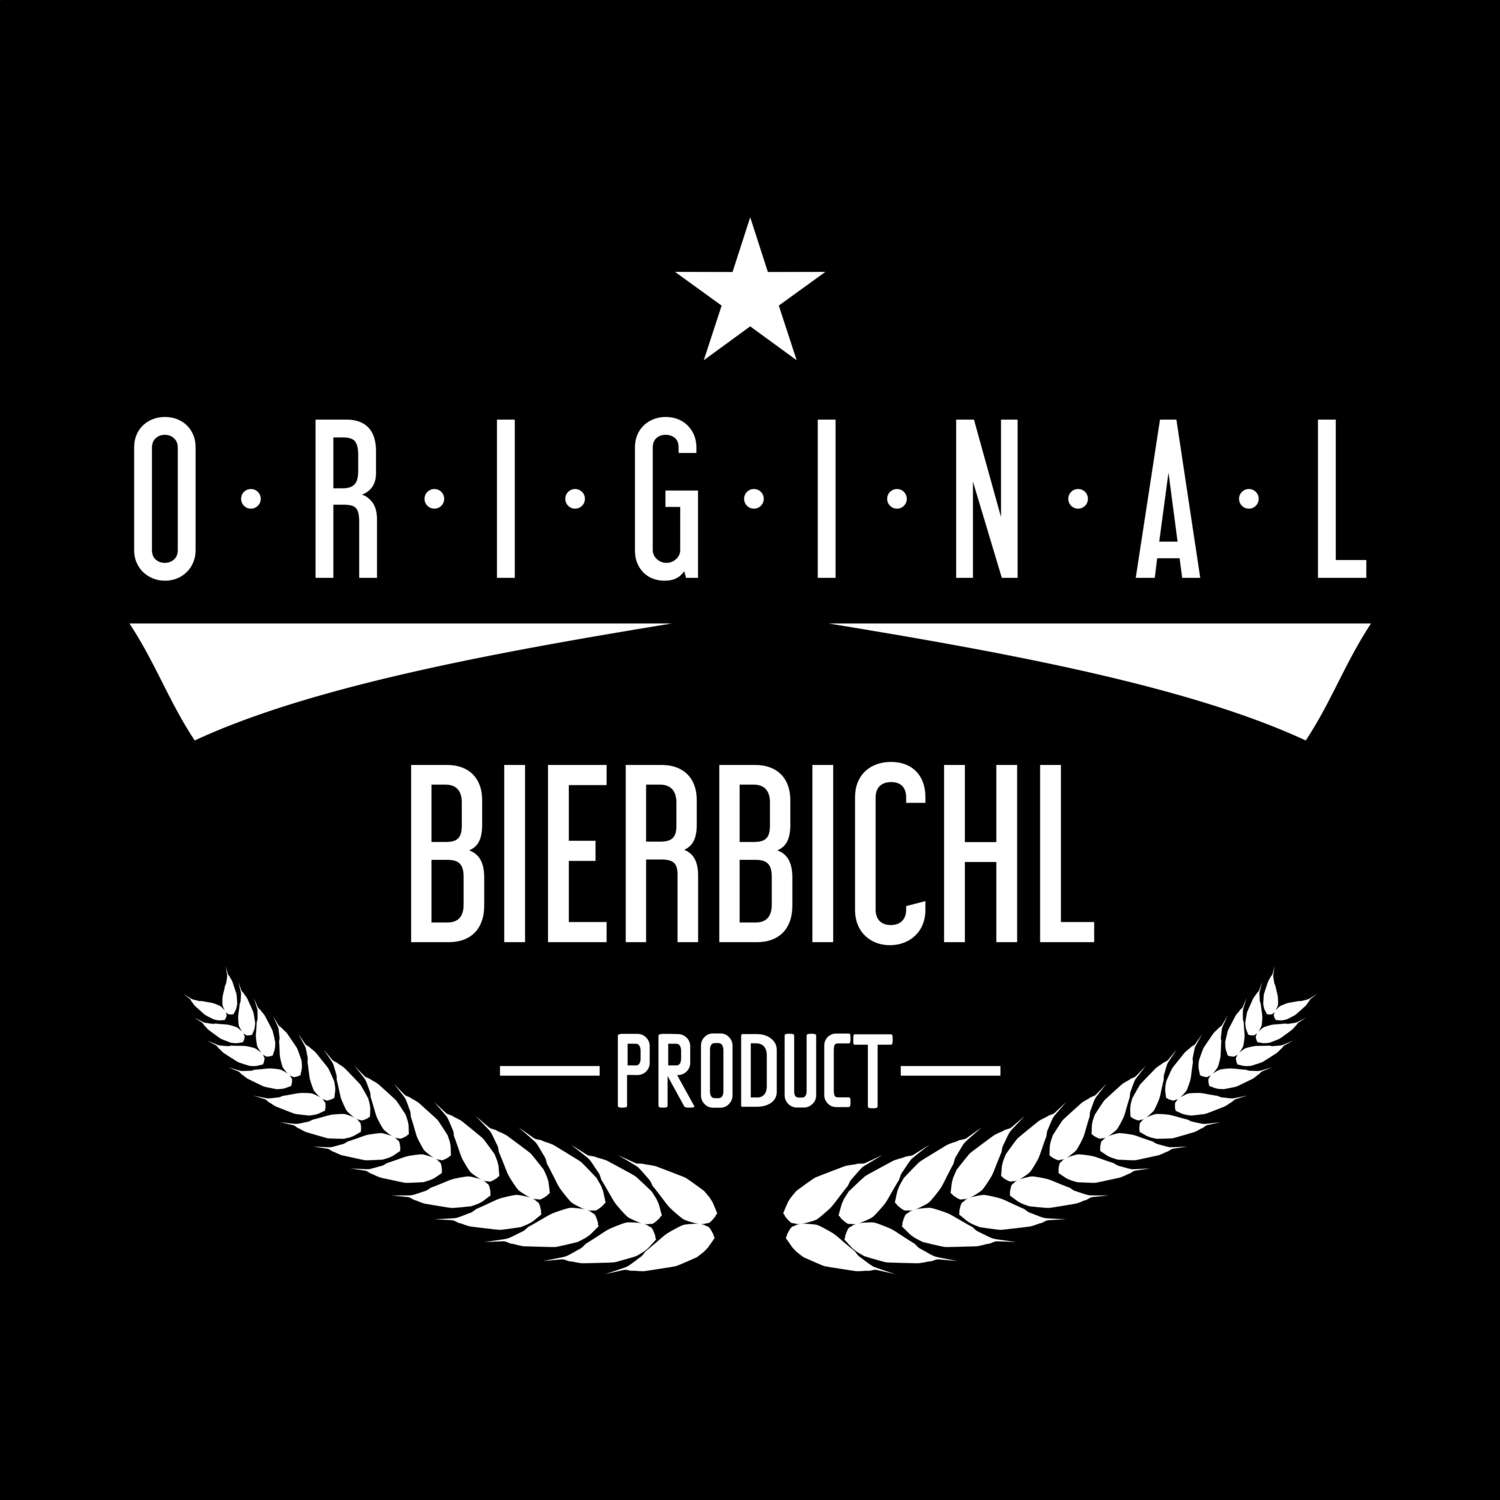 Bierbichl T-Shirt »Original Product«